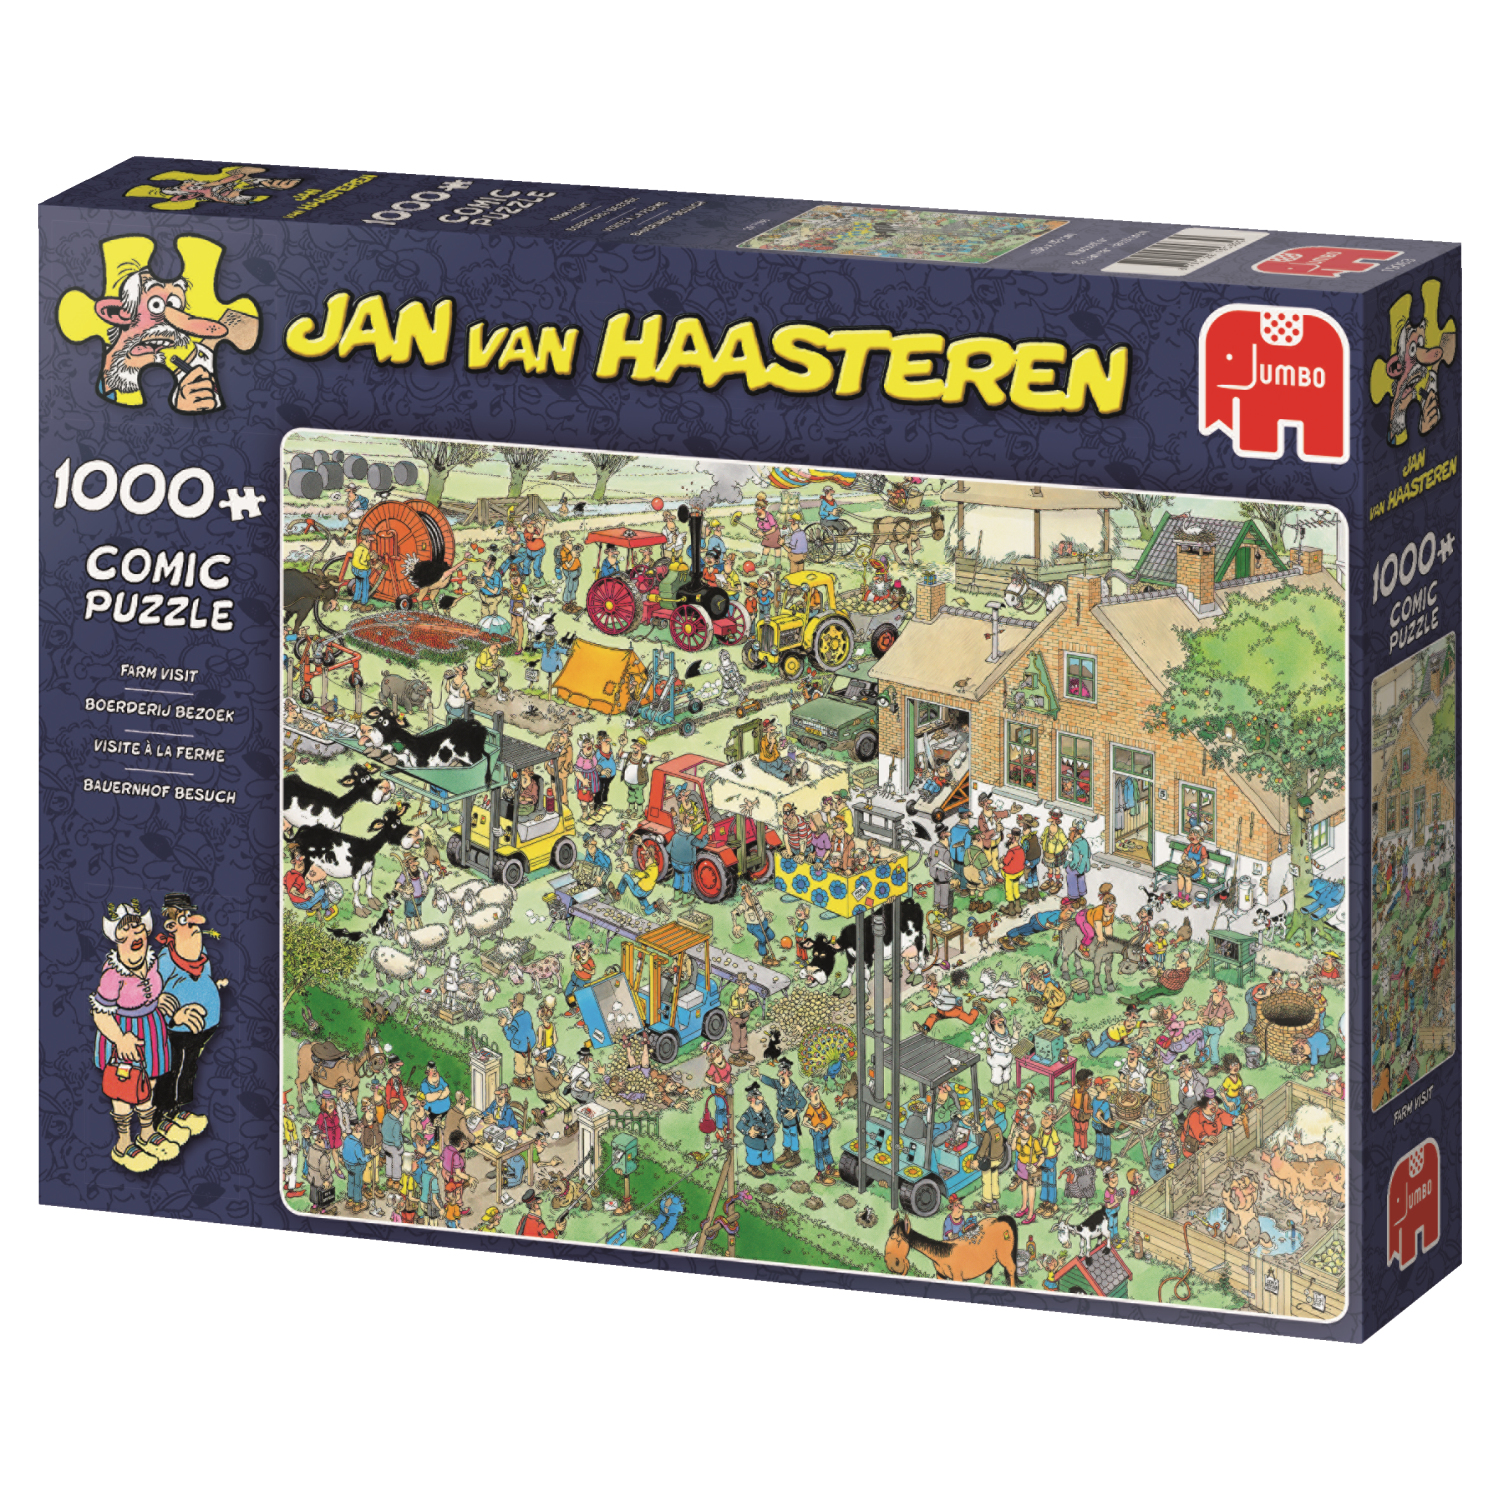 NEW Jumbo Farm Visit by Jan van Haasteren 1000 piece comic jigsaw puzzle 19063 